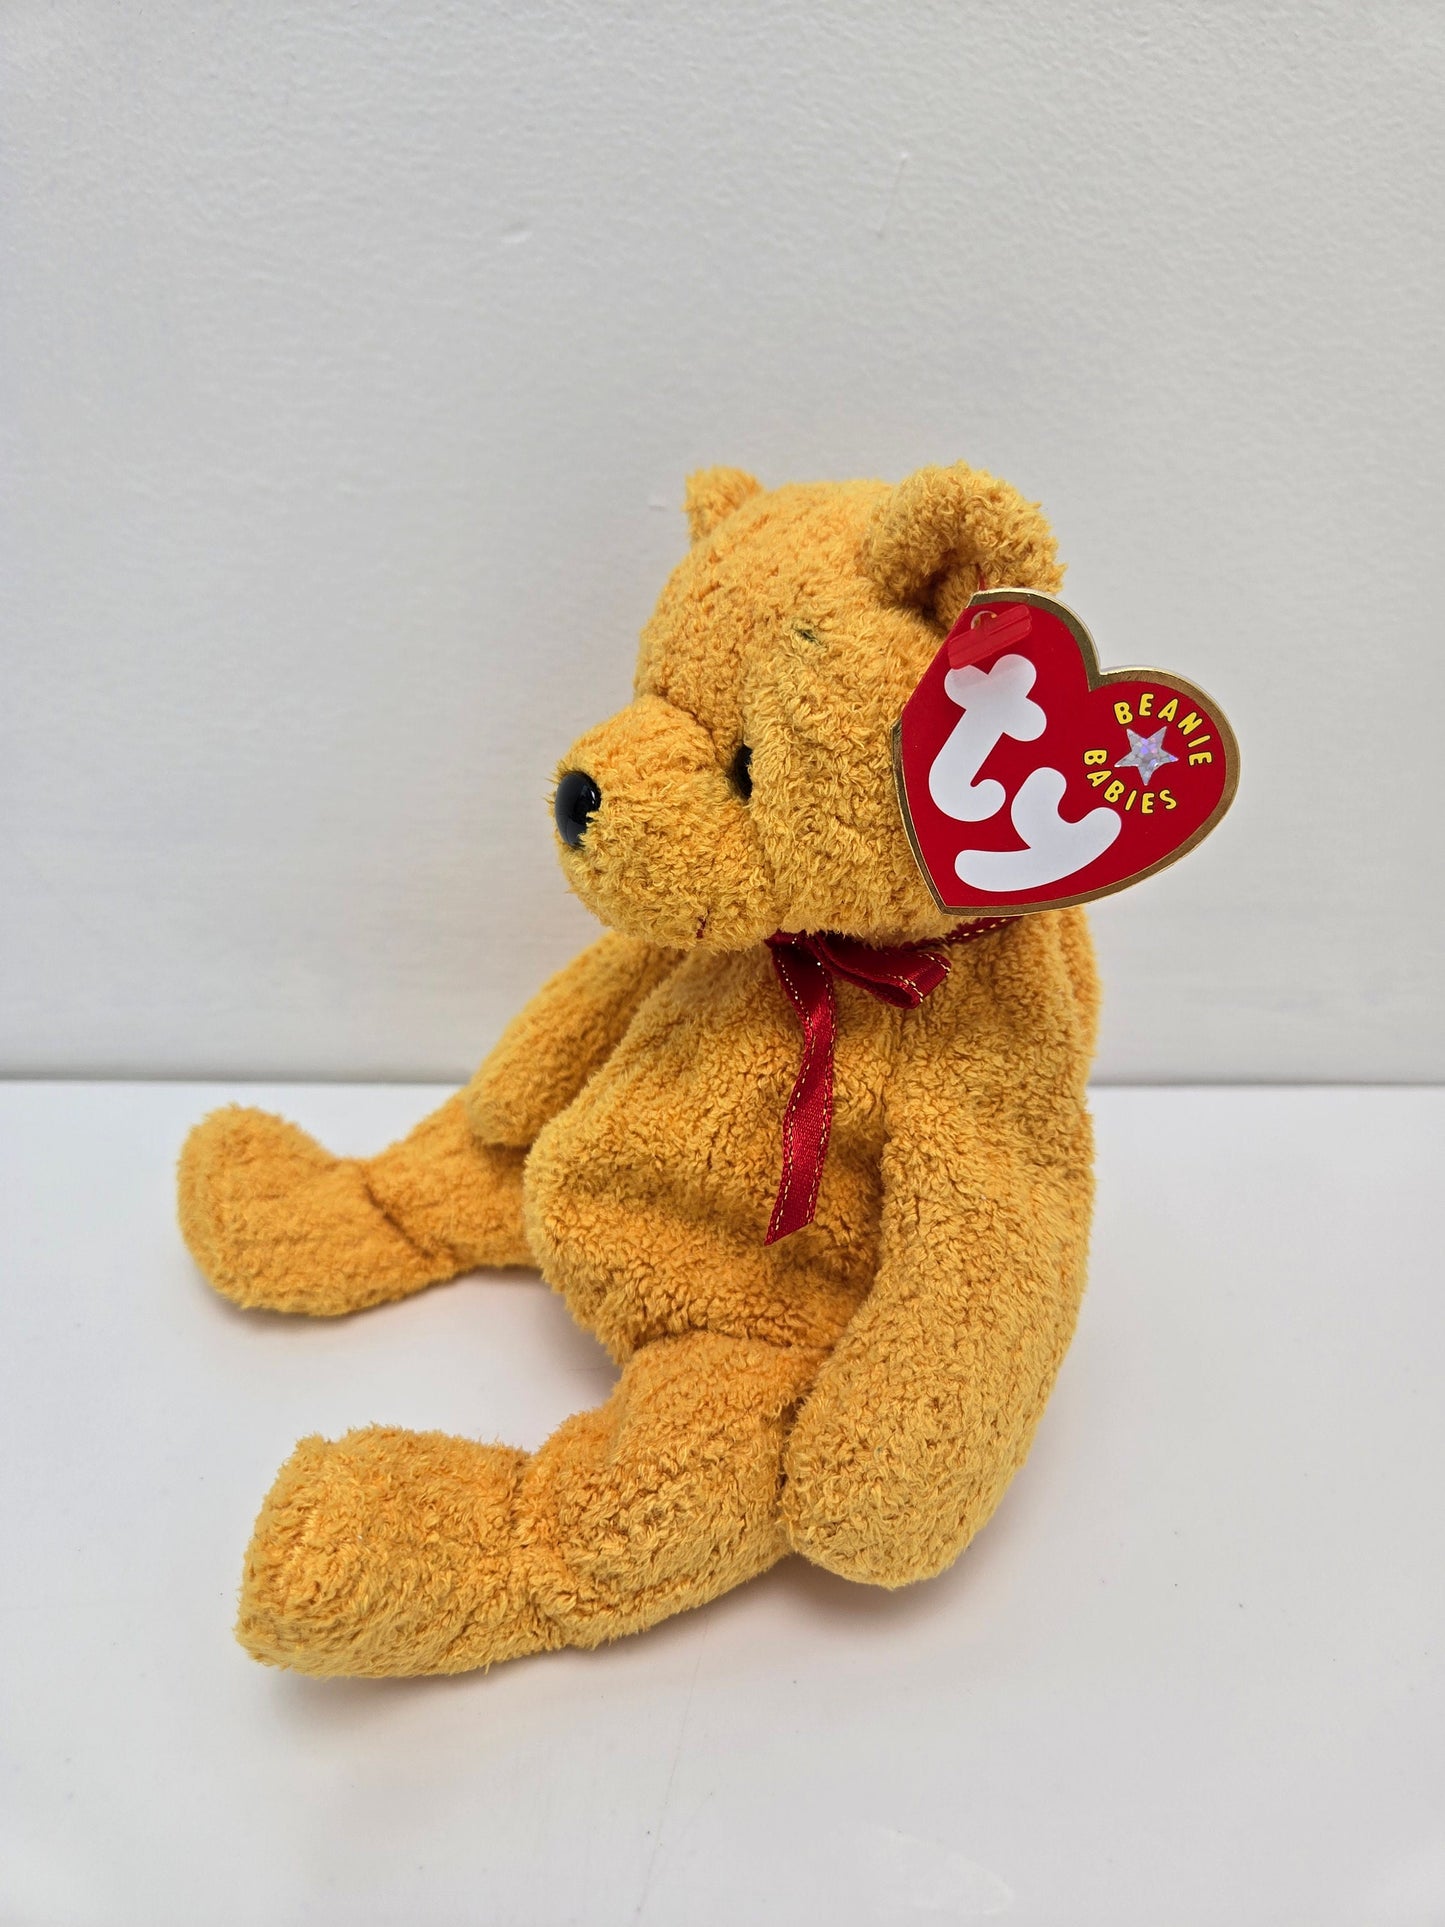 Ty Beanie Baby “Poopsie” the Yellow Bear (8 inch)